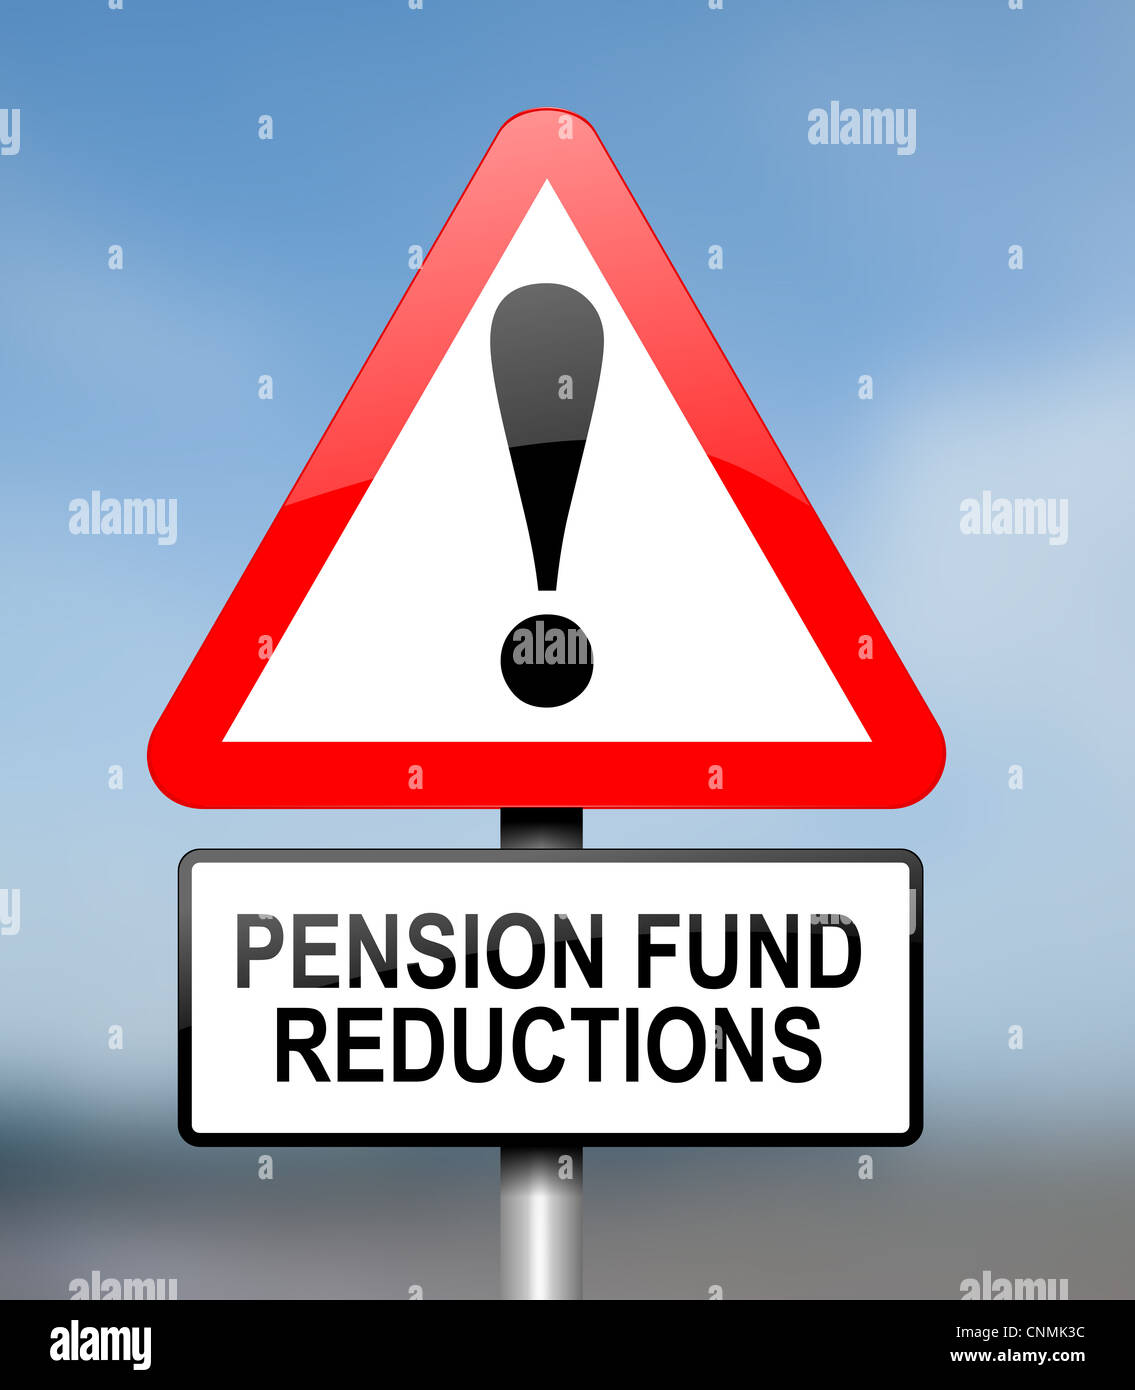 Pension fund alert. Stock Photo